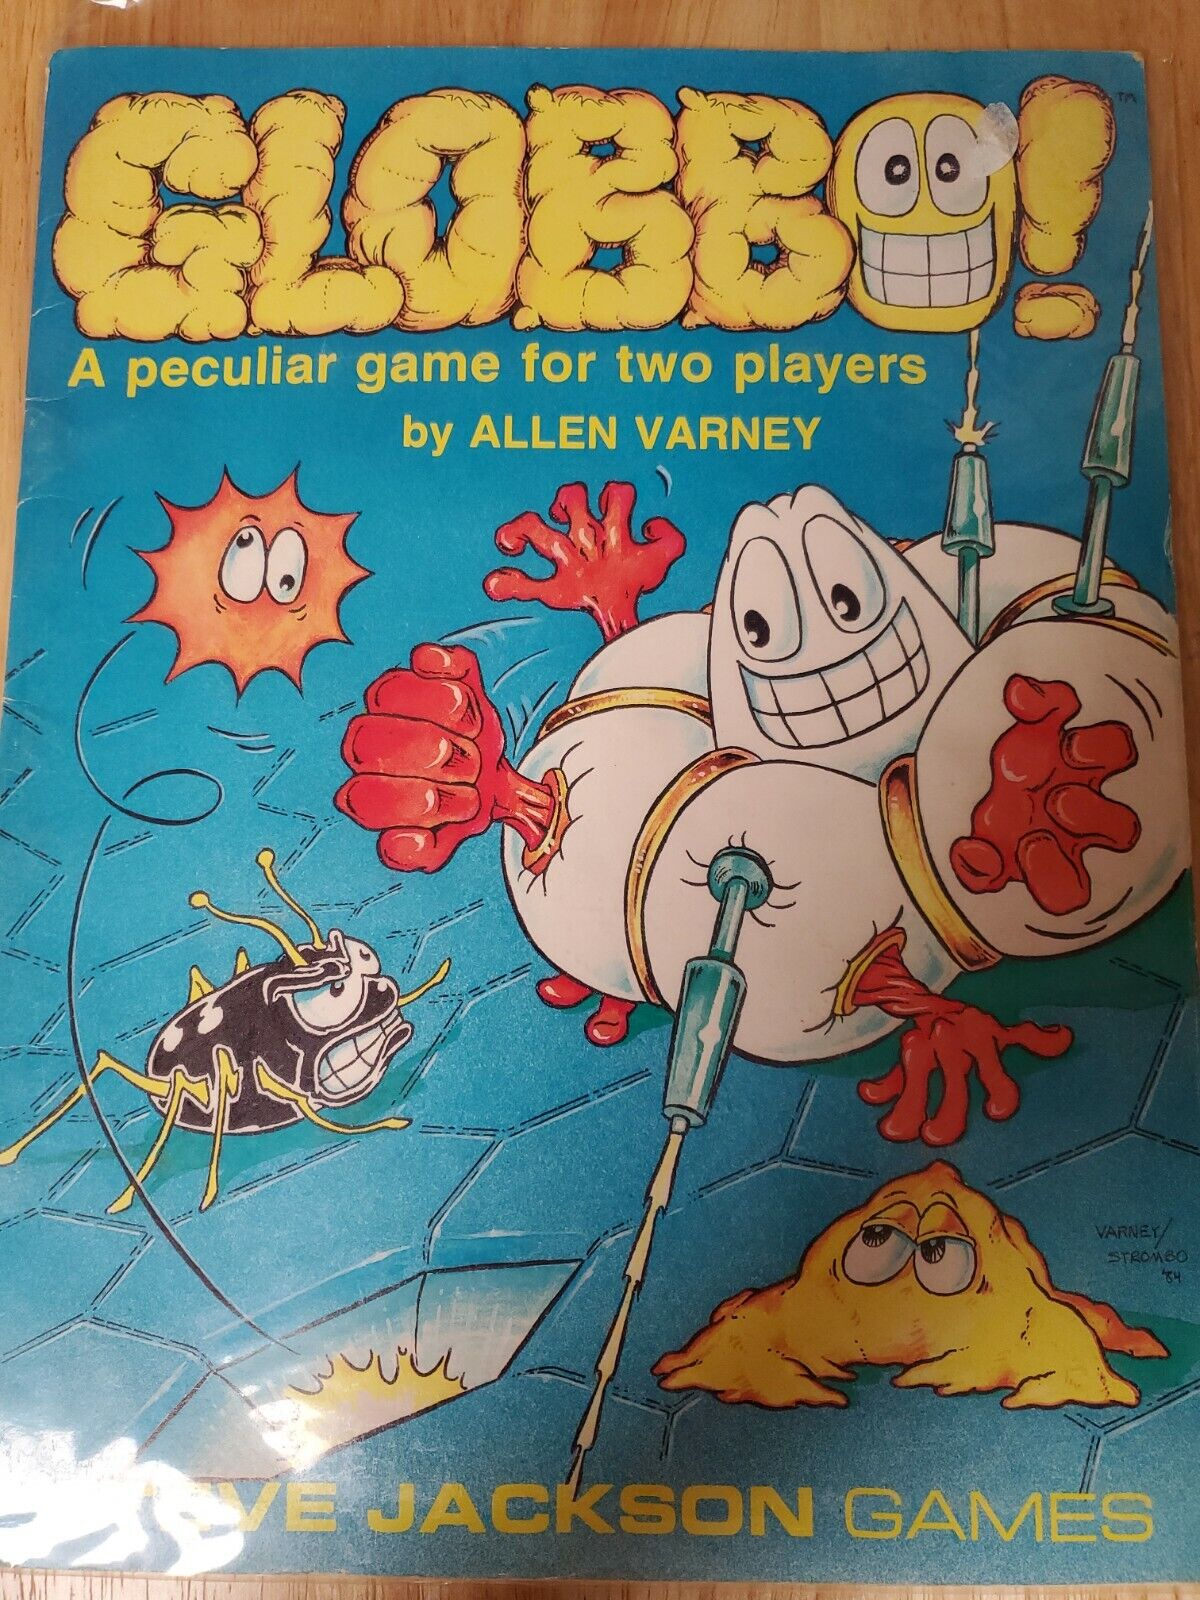 Globbo game by Steve Jackson Games